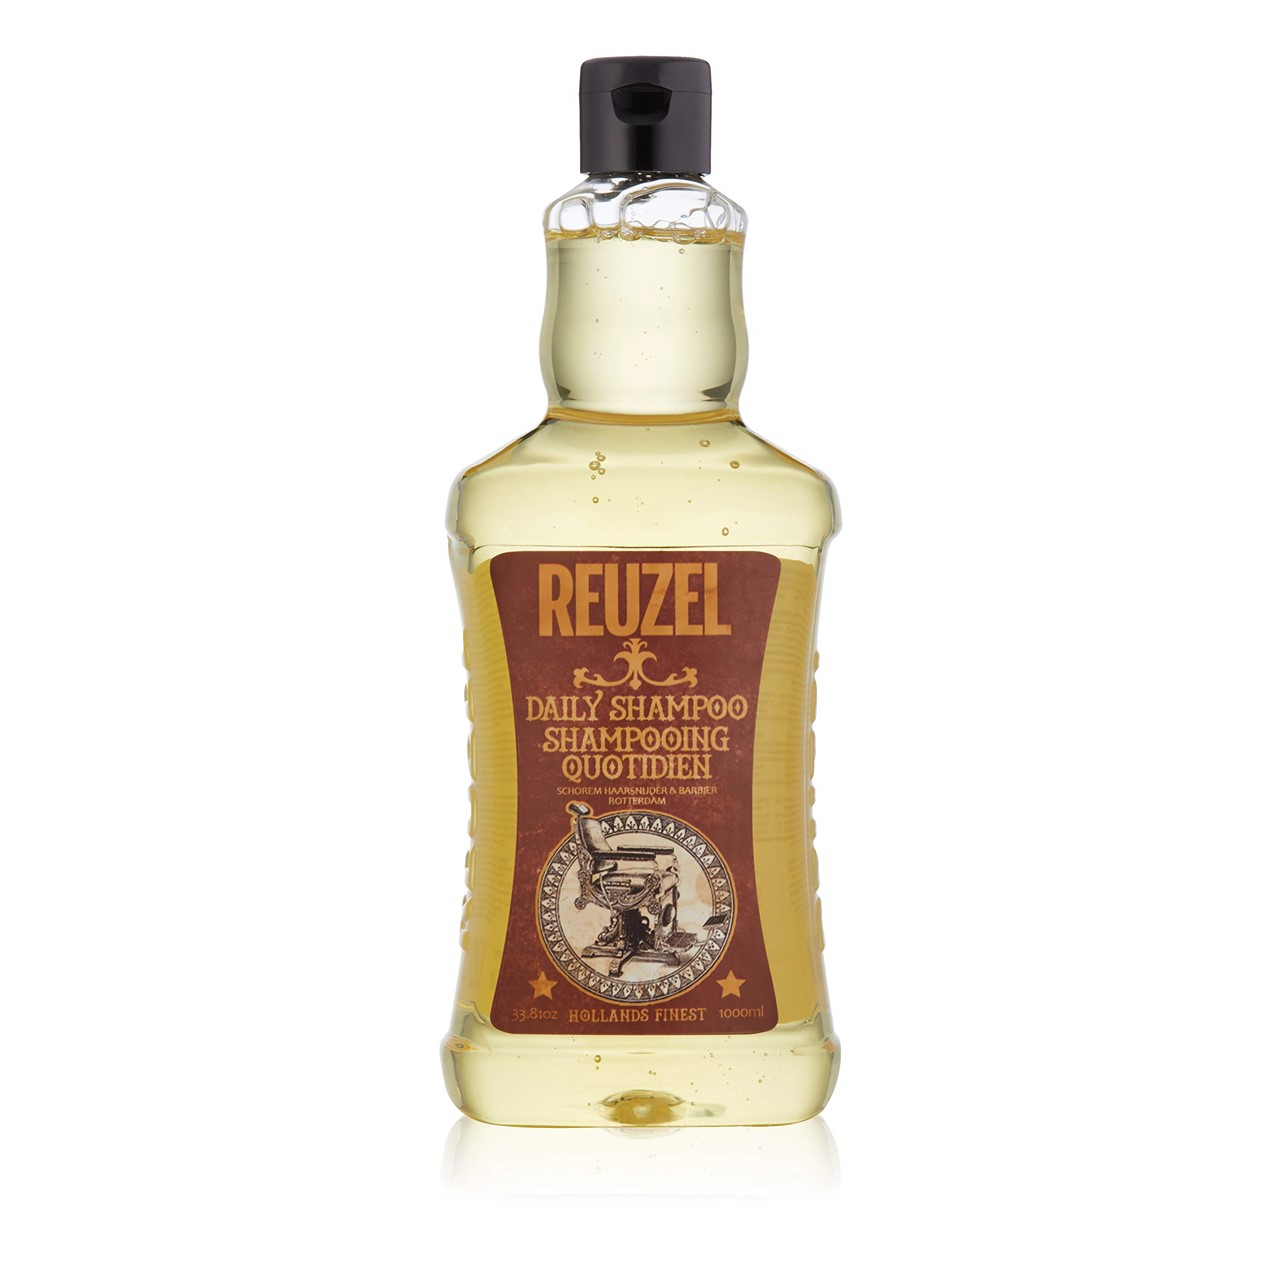 Reuzel Daily Shampoo 1L (33.81 fl oz)